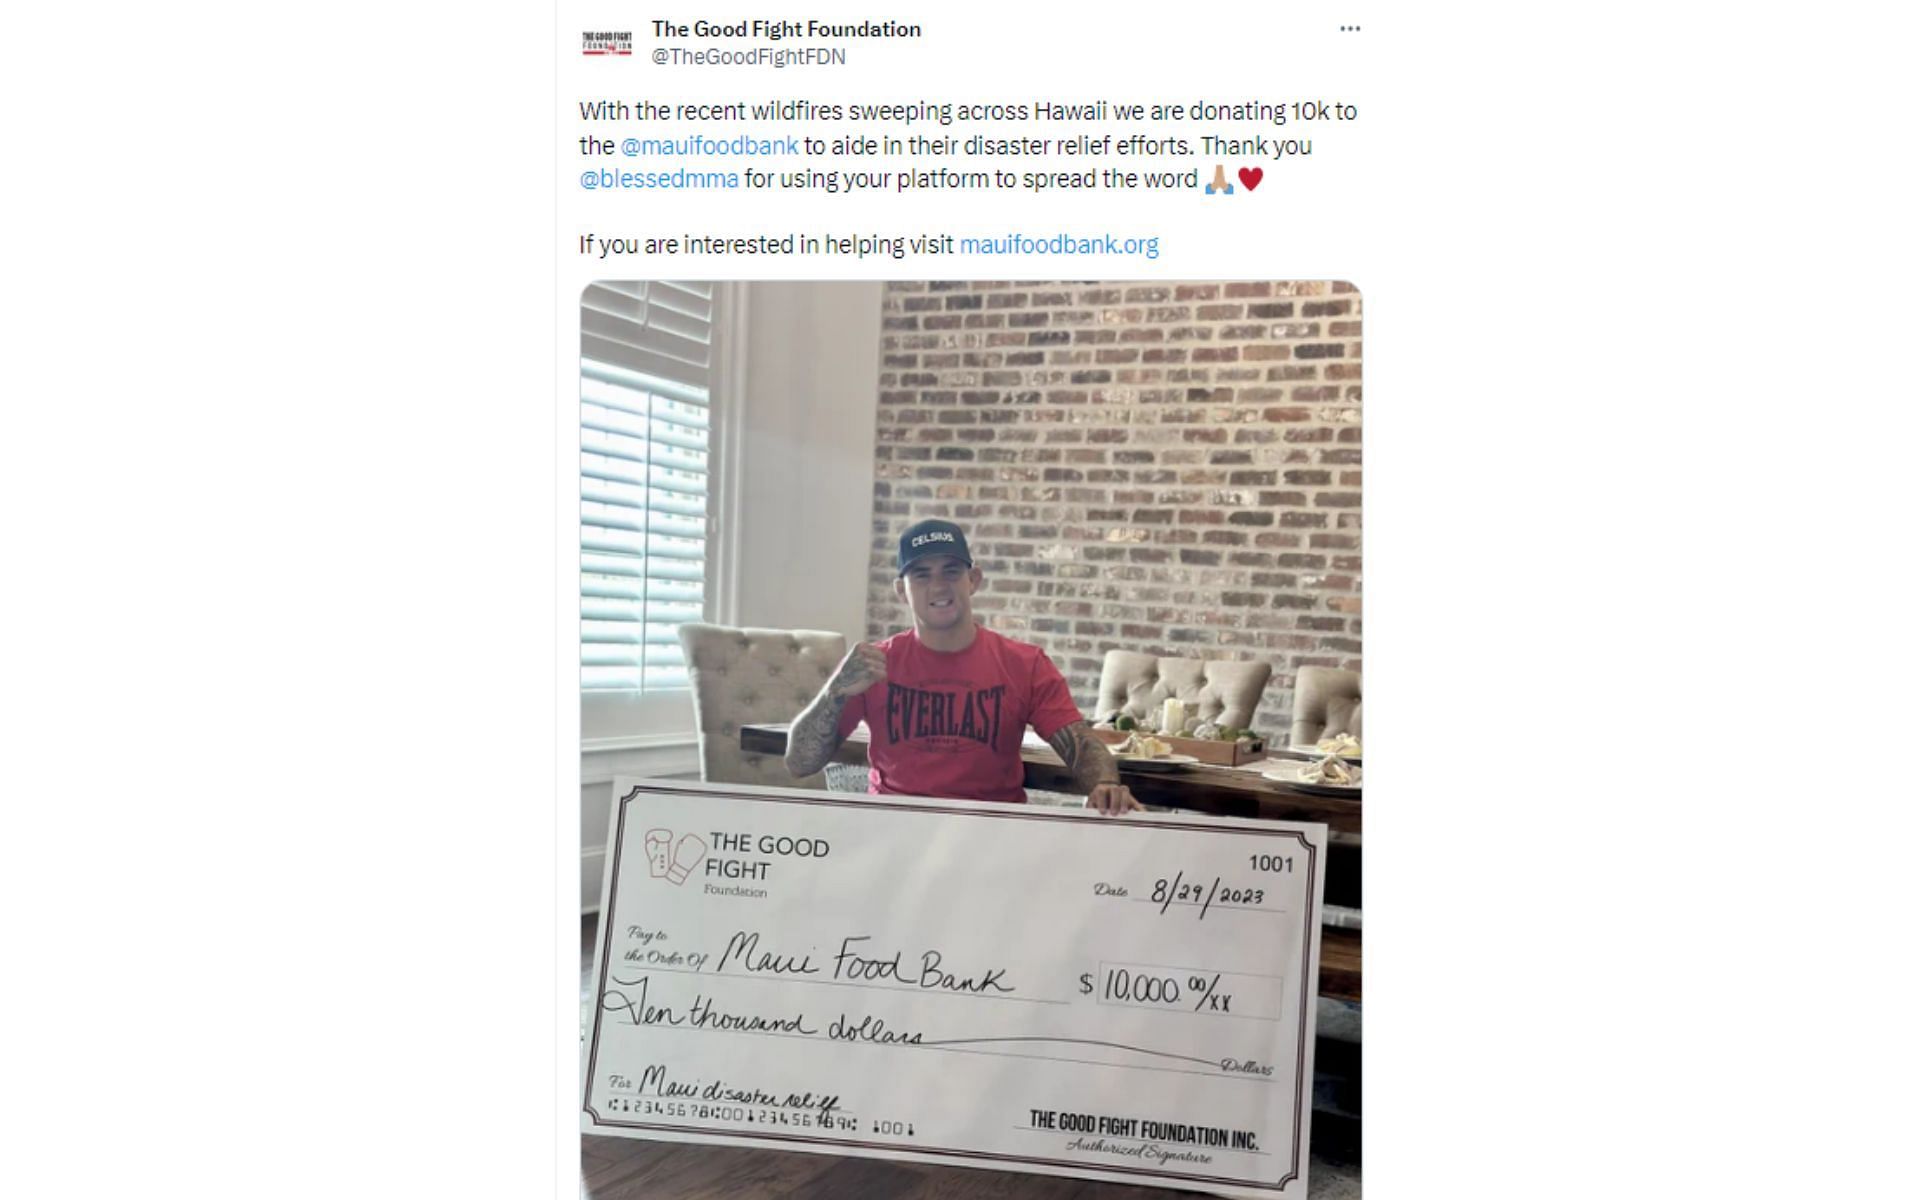 The Good Fight Foundation tweet regarding their donation